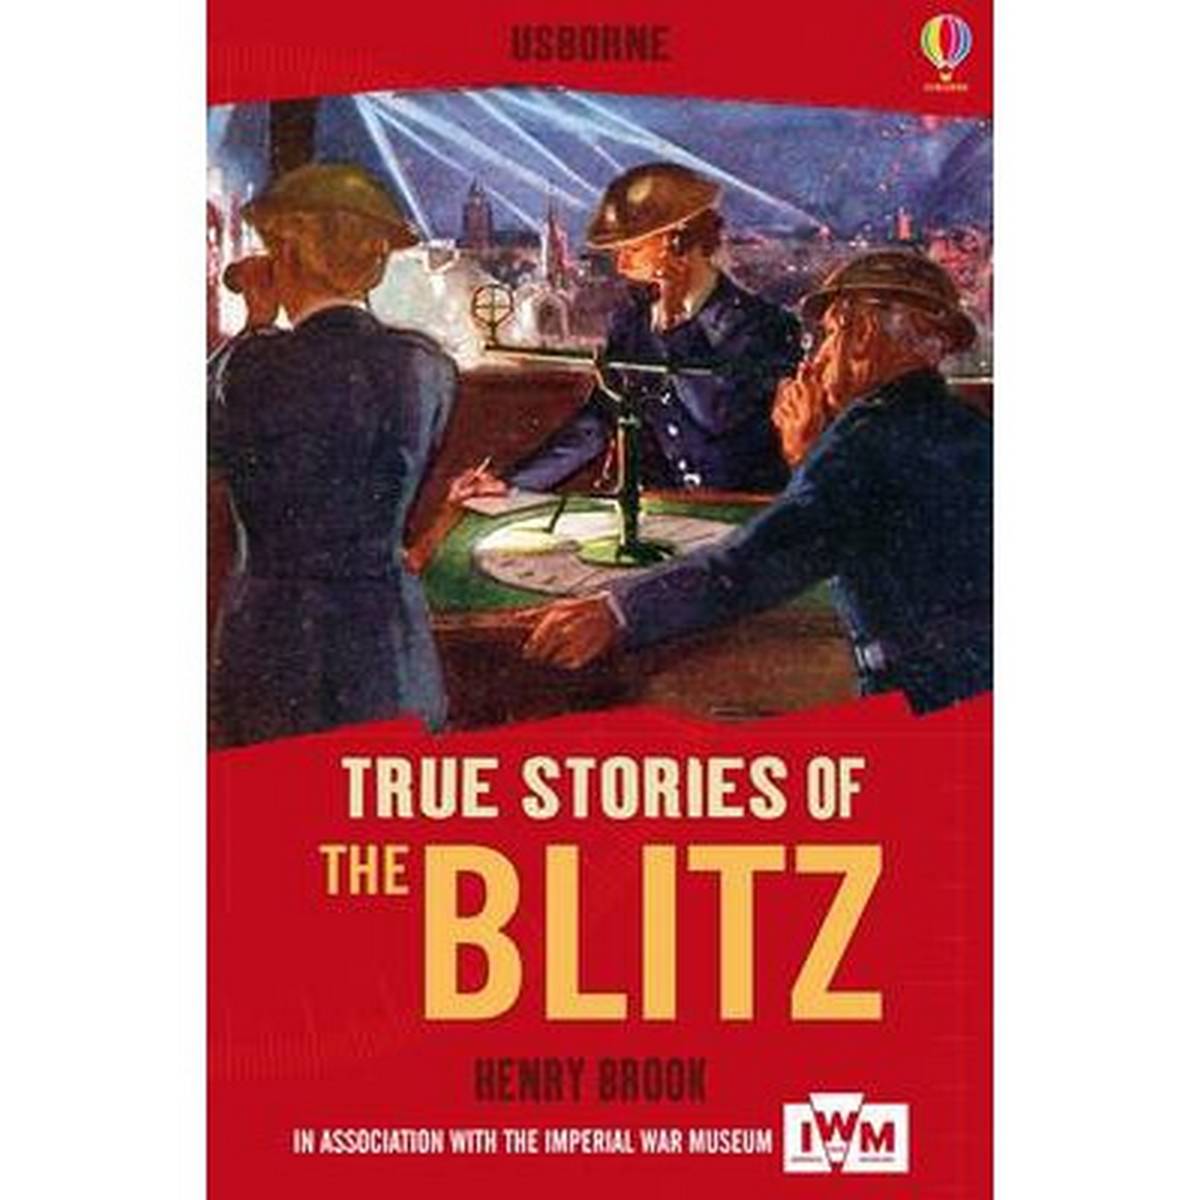 True Stories of The Blitz